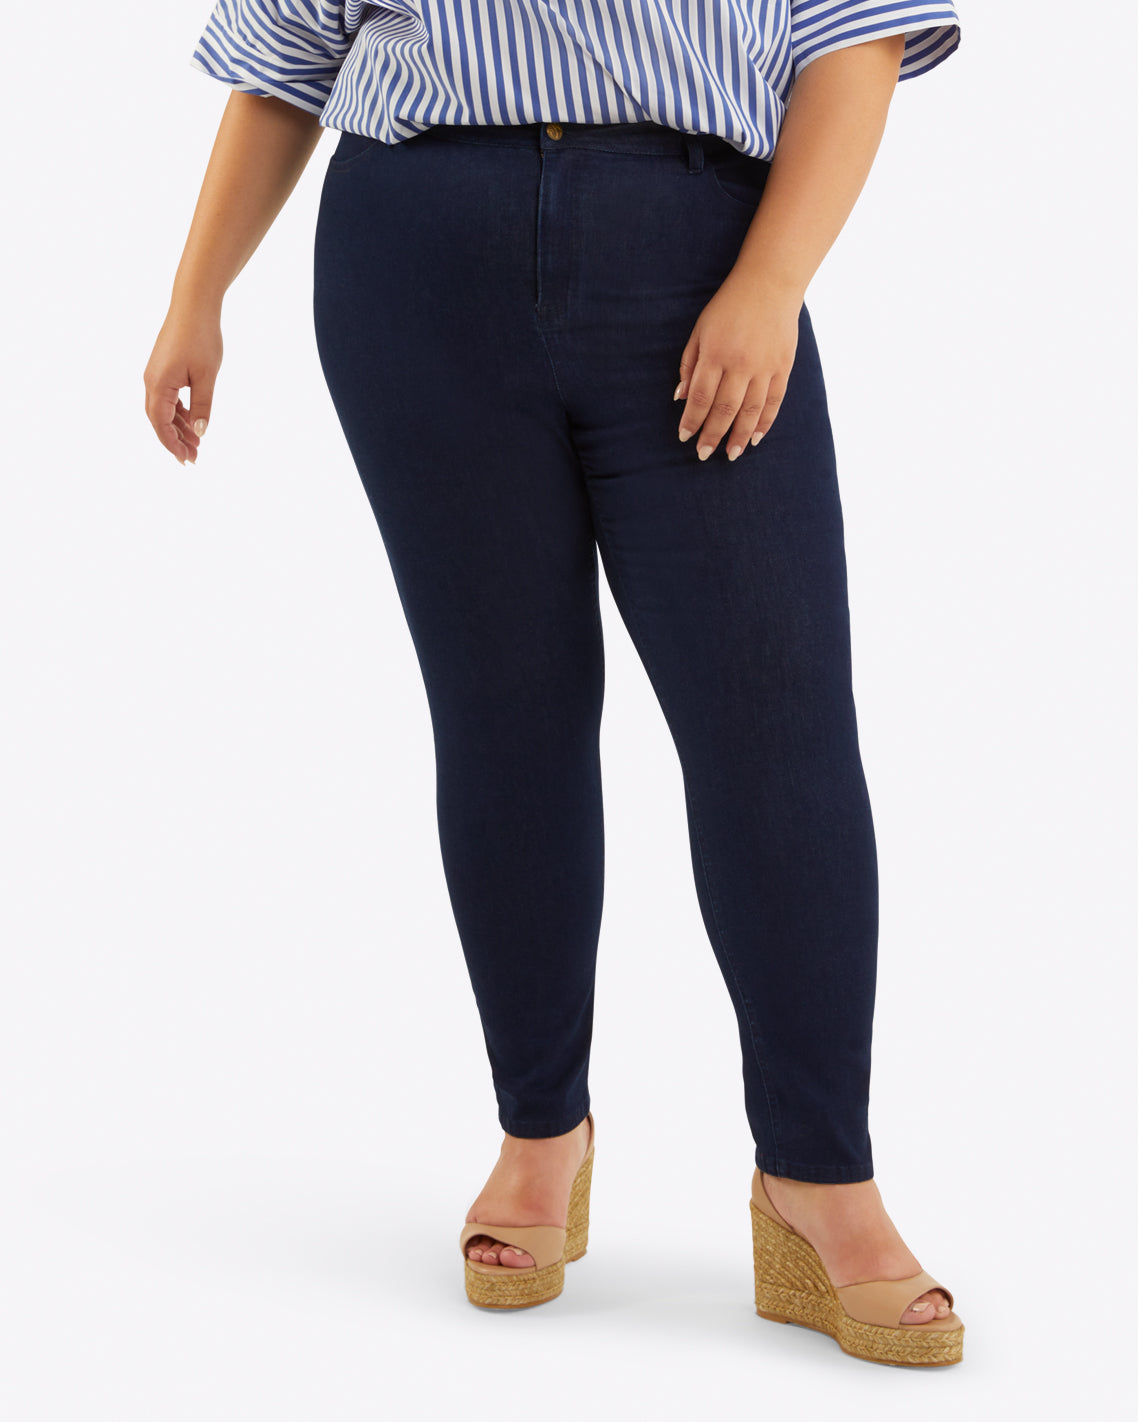 Terra & Sky Women's Plus Size High Waist Straight Leg Jeans (US